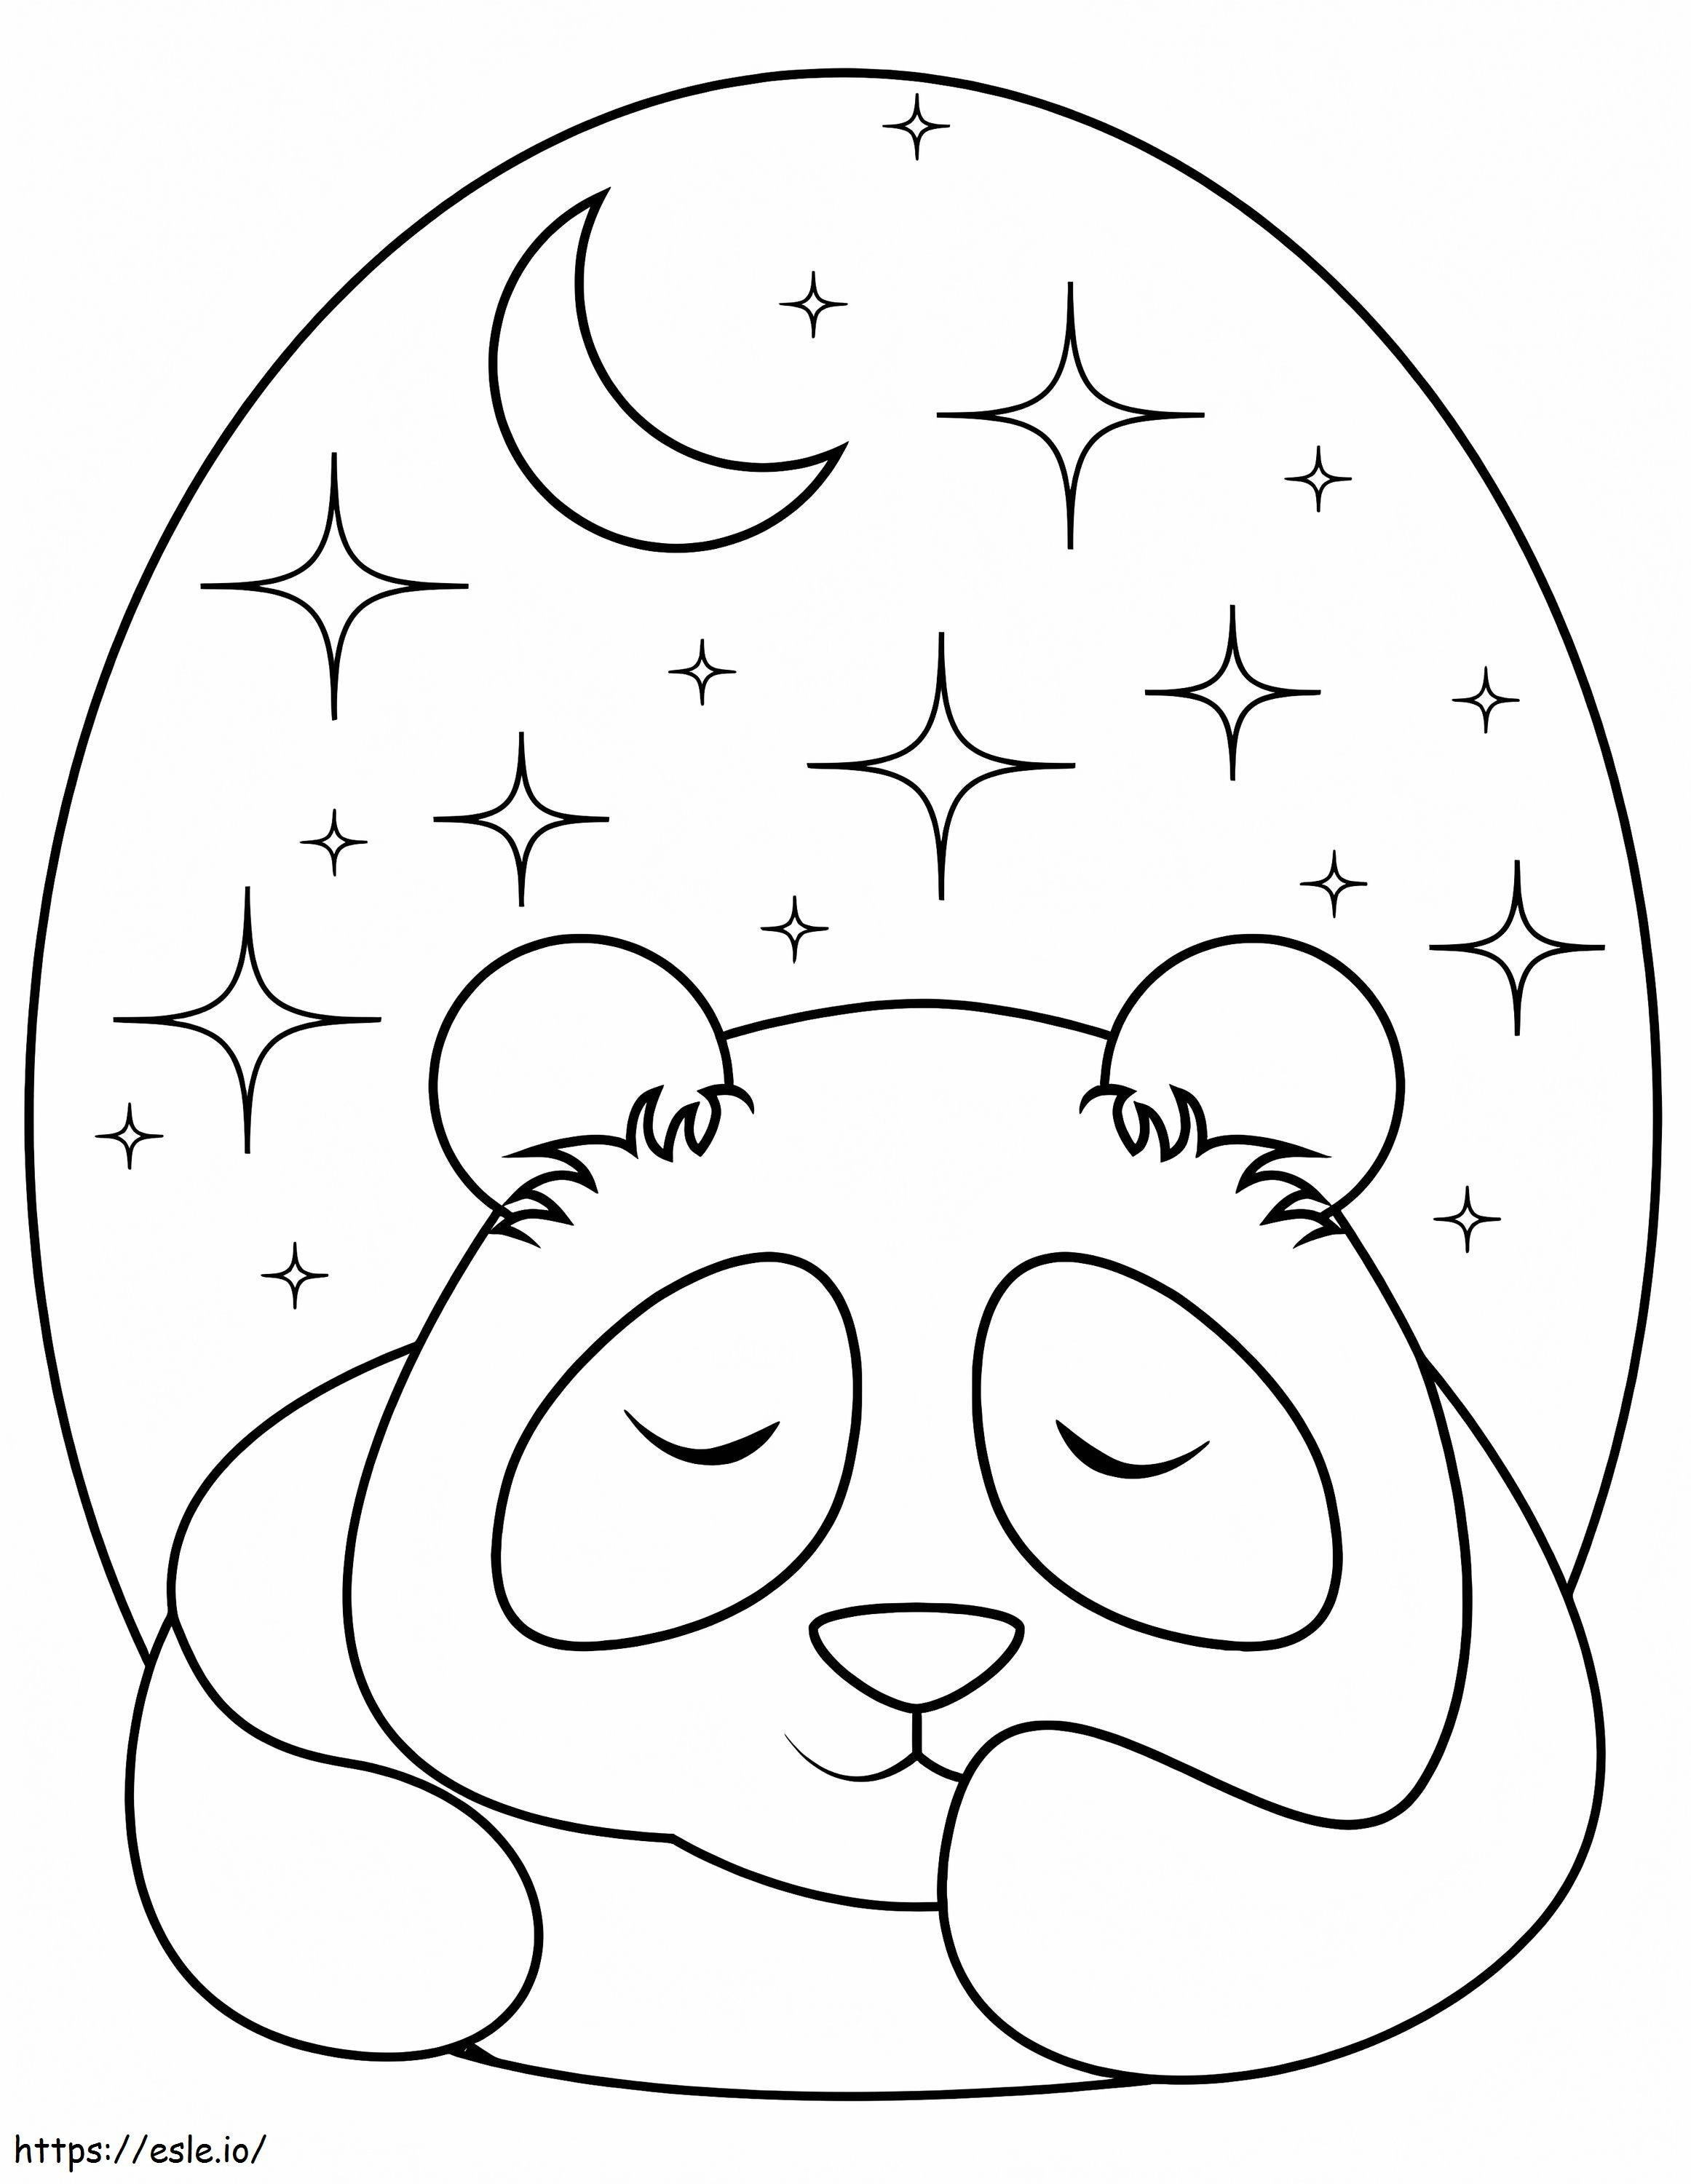 Sleeping Panda coloring page